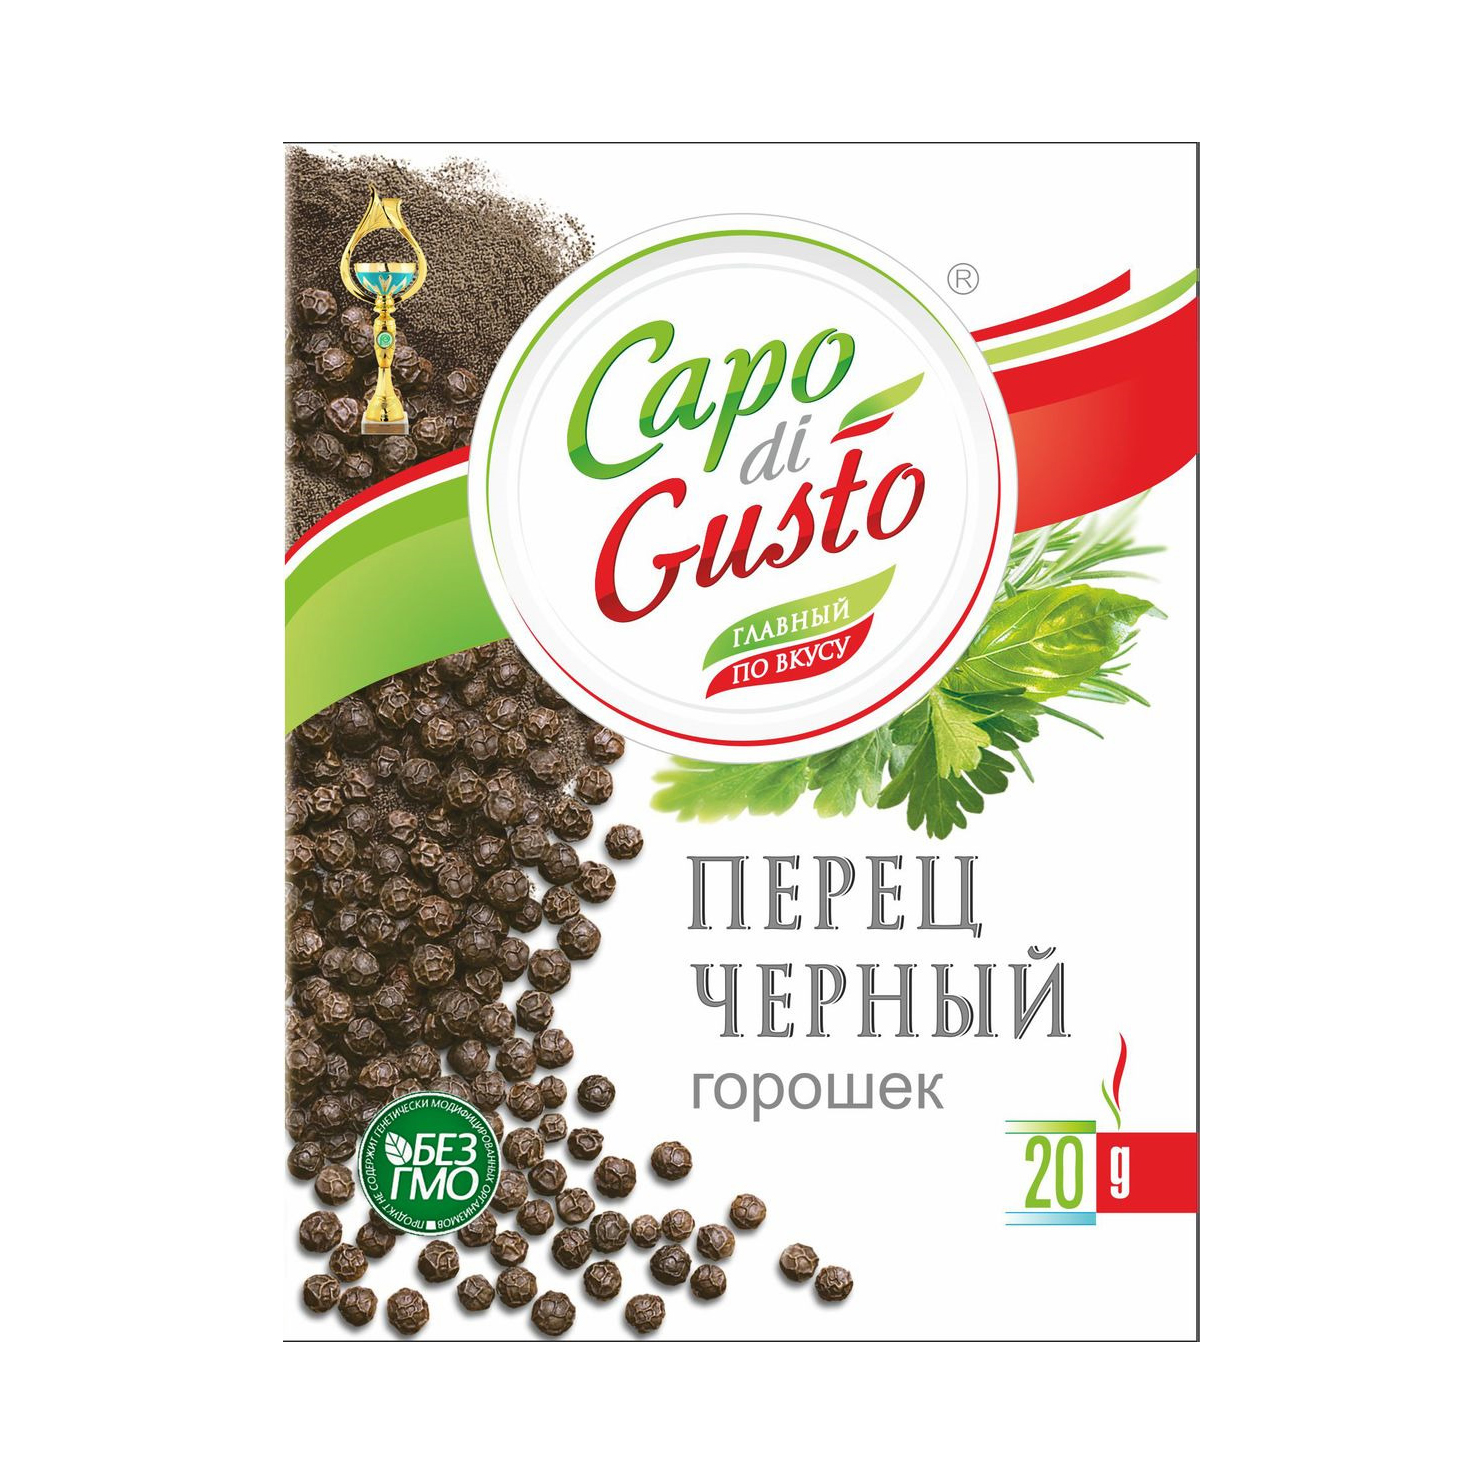 Перец черный горошек Capo di Gusto 20 г перец черный молотый capo di gusto 50 г